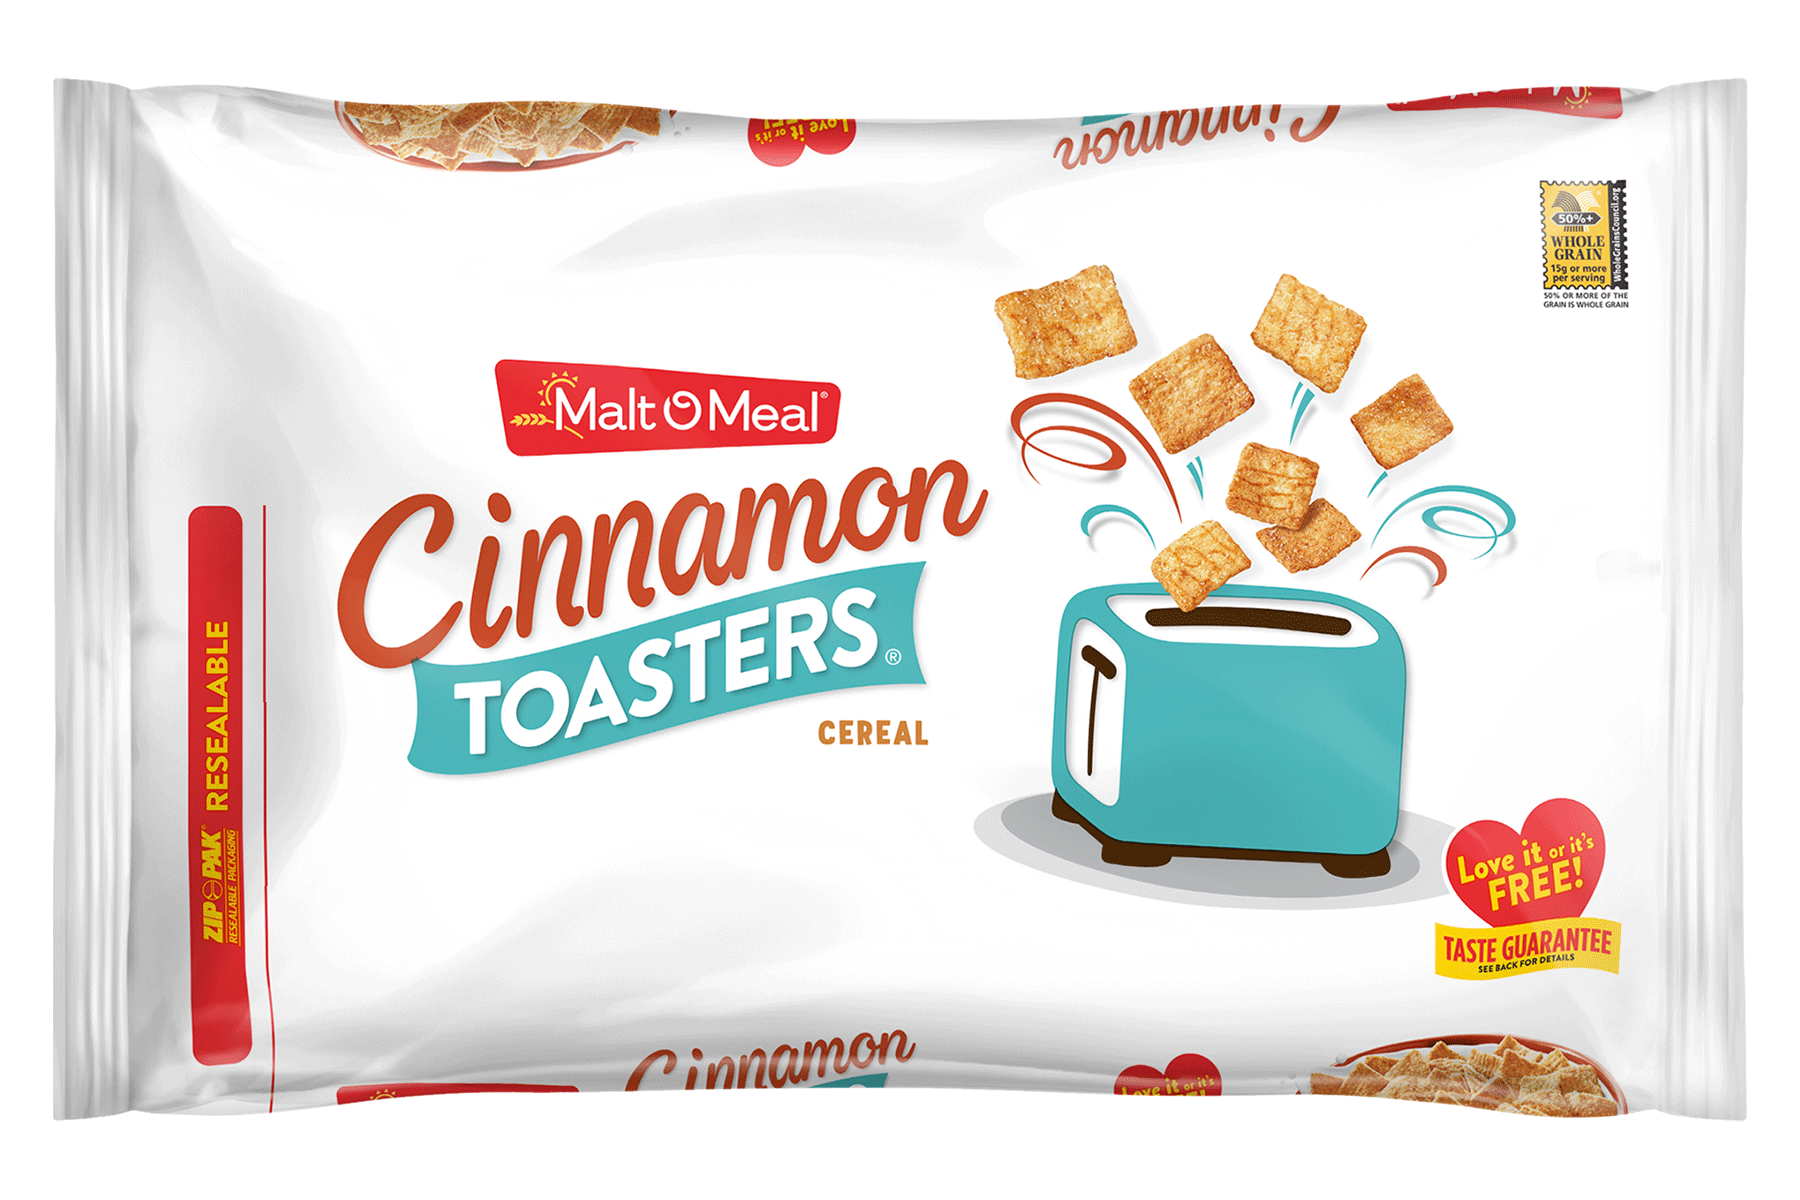 New Malt-O-Meal Cinnamon Toasters Cereal Bag